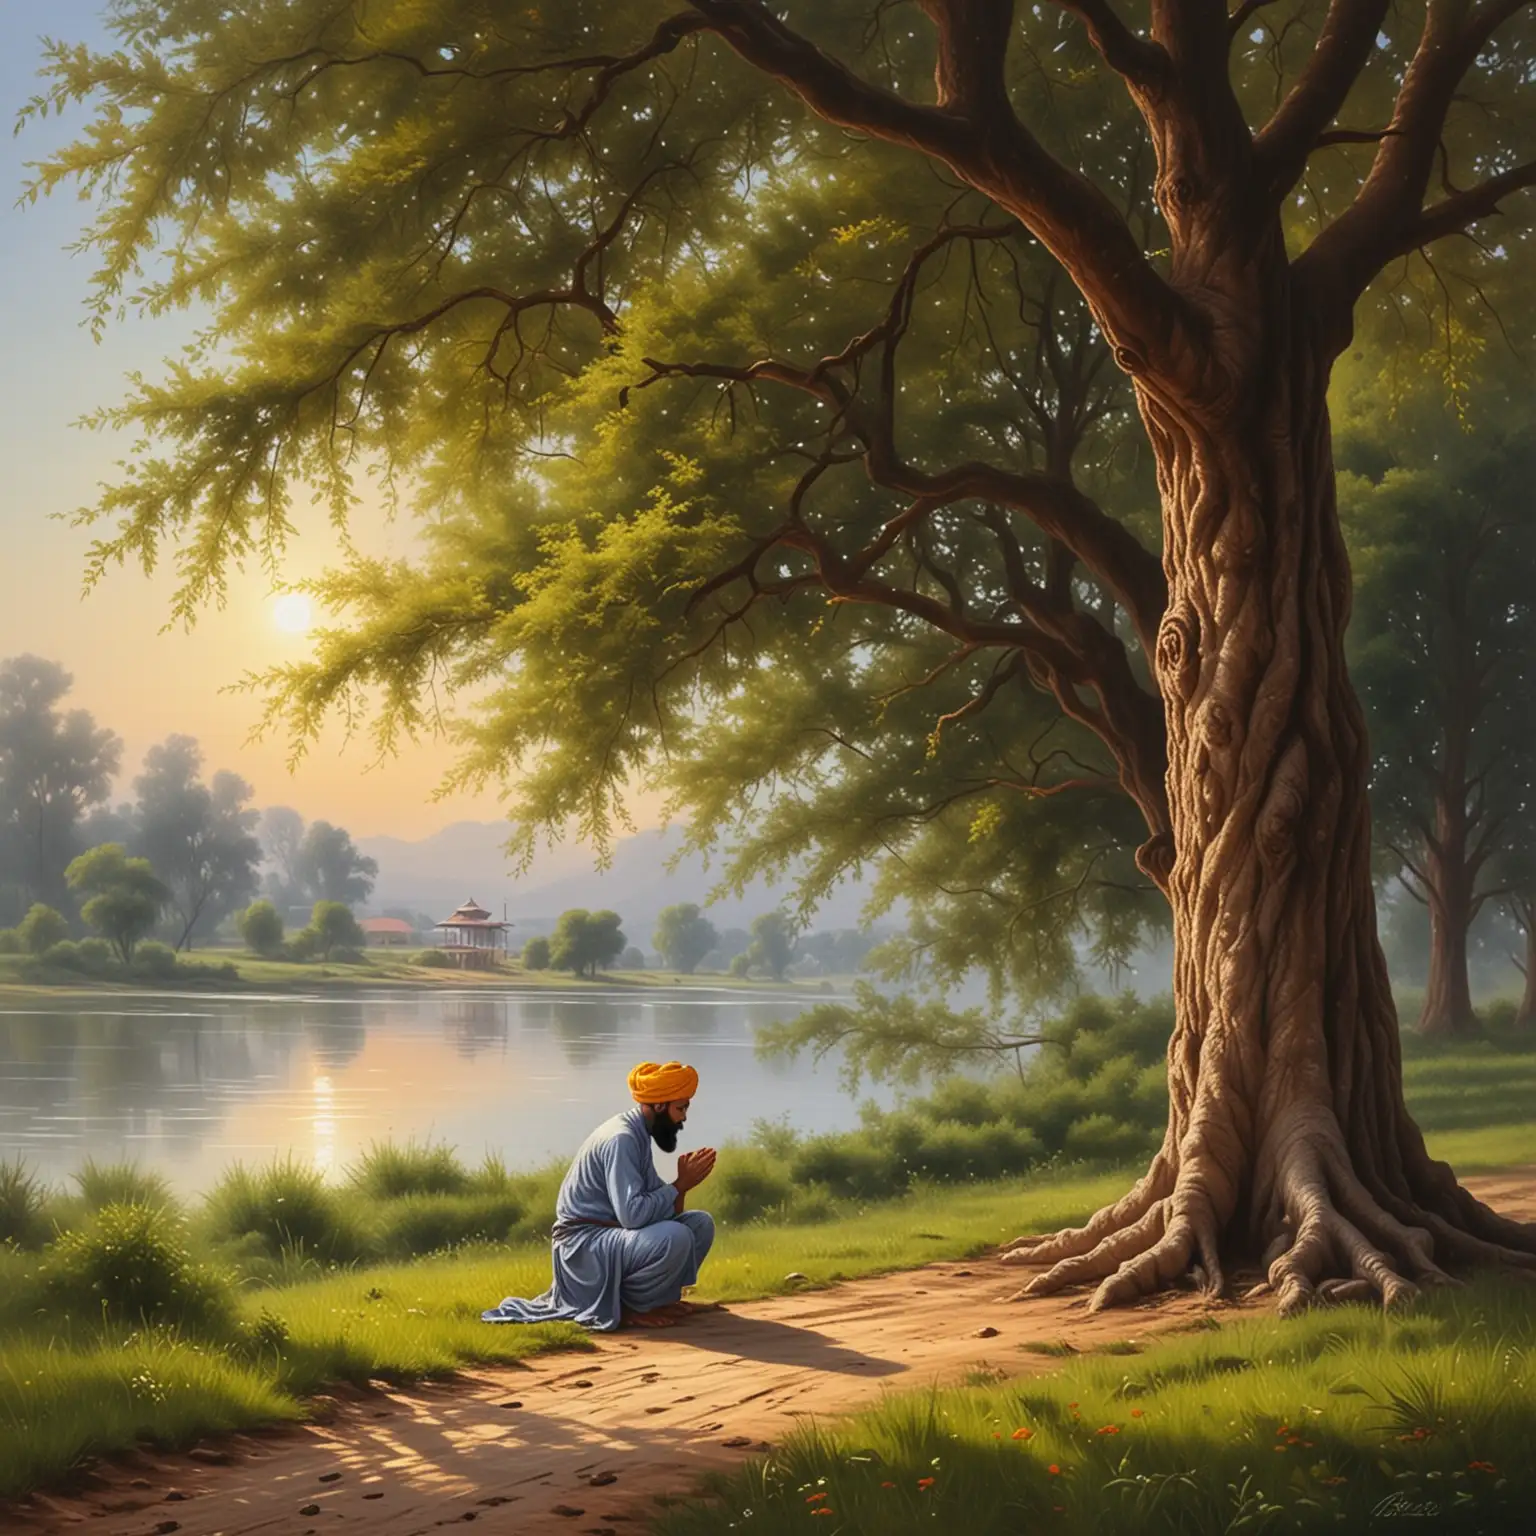 Sikh Man Praying Under Tree Tranquil Oil Painting Scene